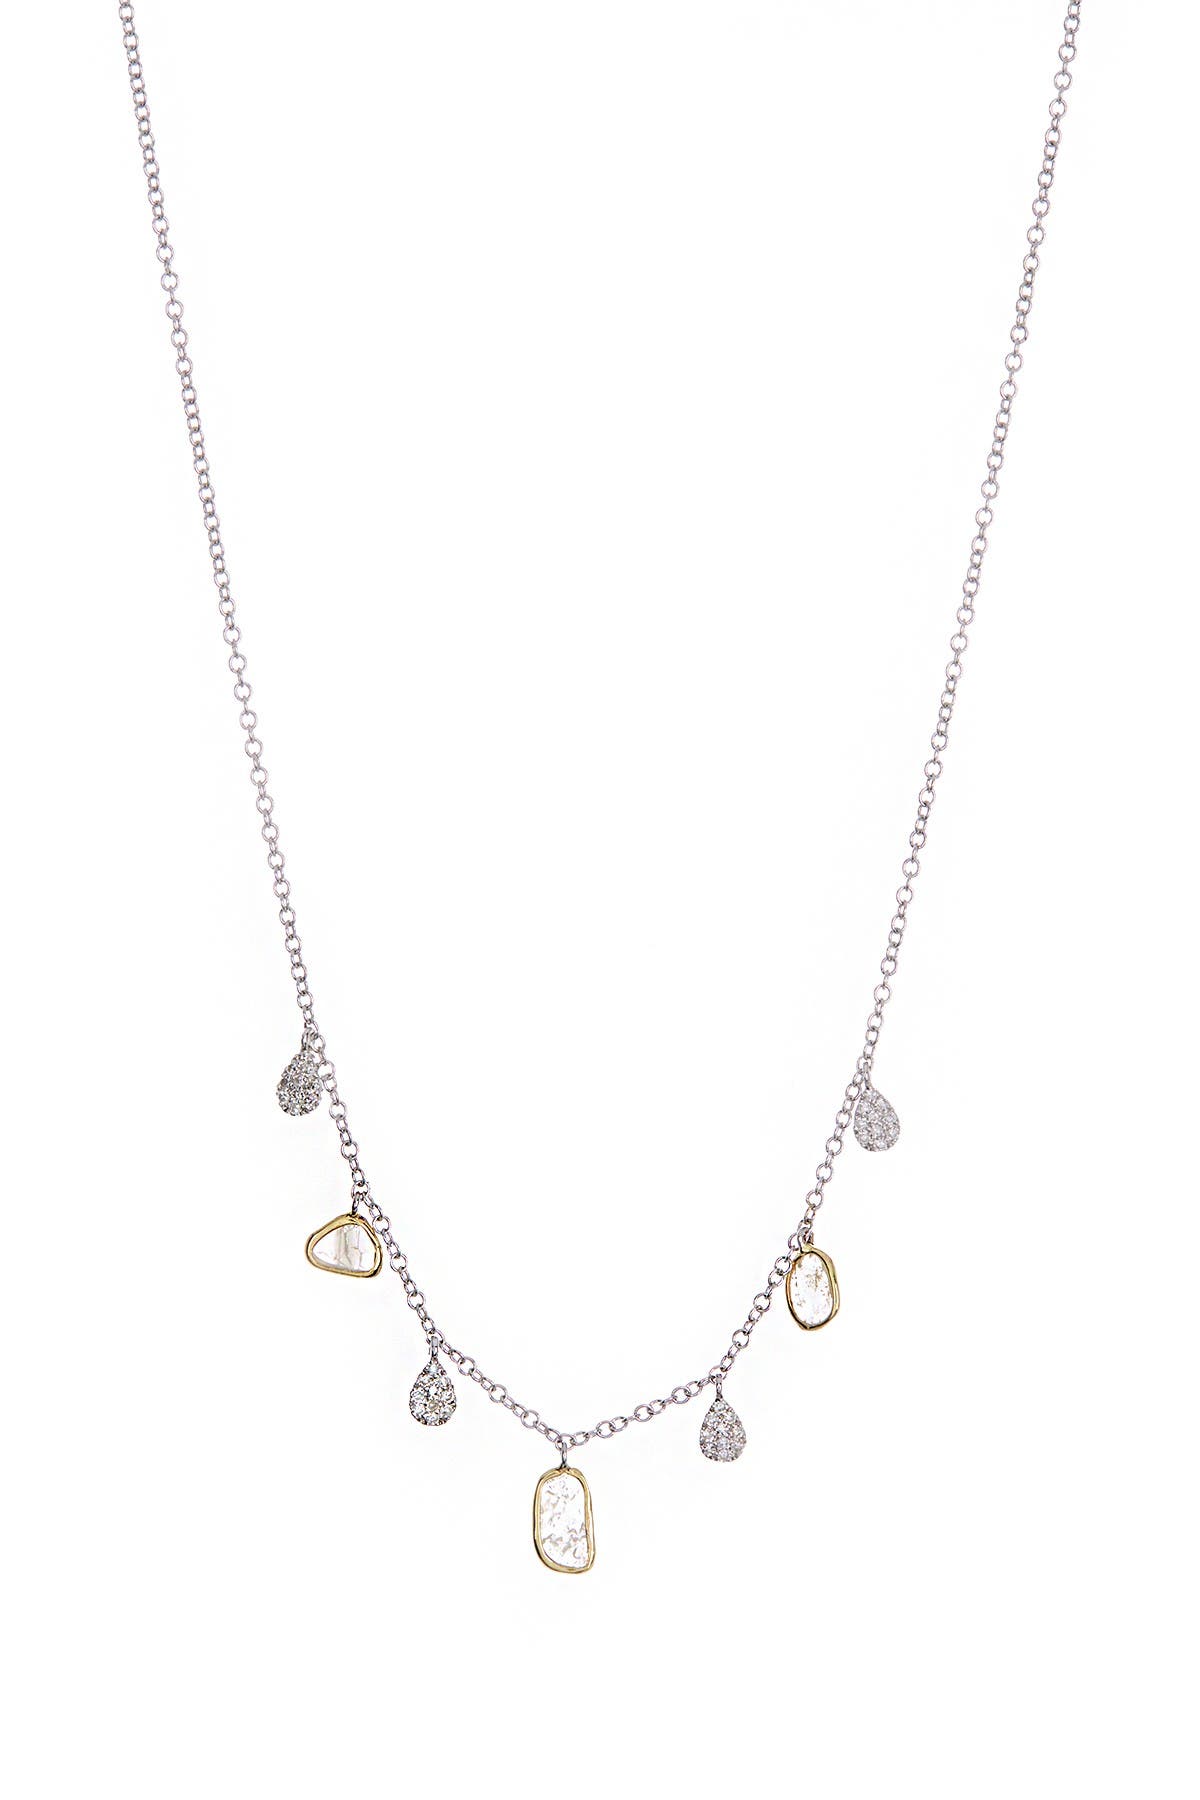 Meira T 14k White Gold Pave Diamond Fringe Necklace